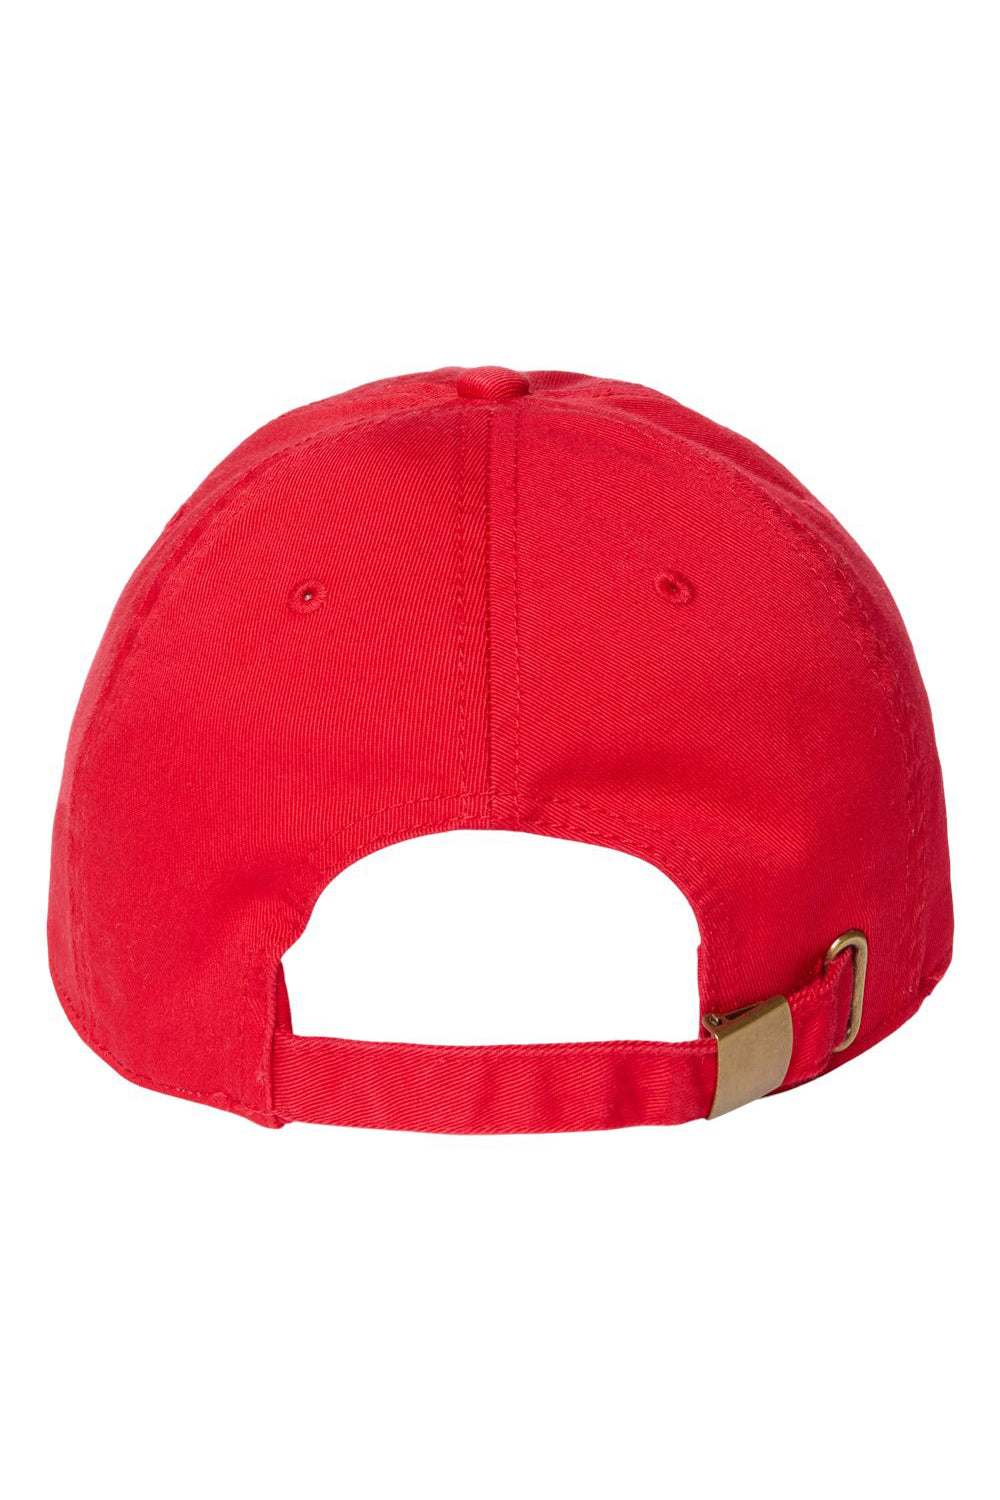 Atlantis Headwear FRASER Mens Sustainable Adjustable Dad Hat Red Flat Back